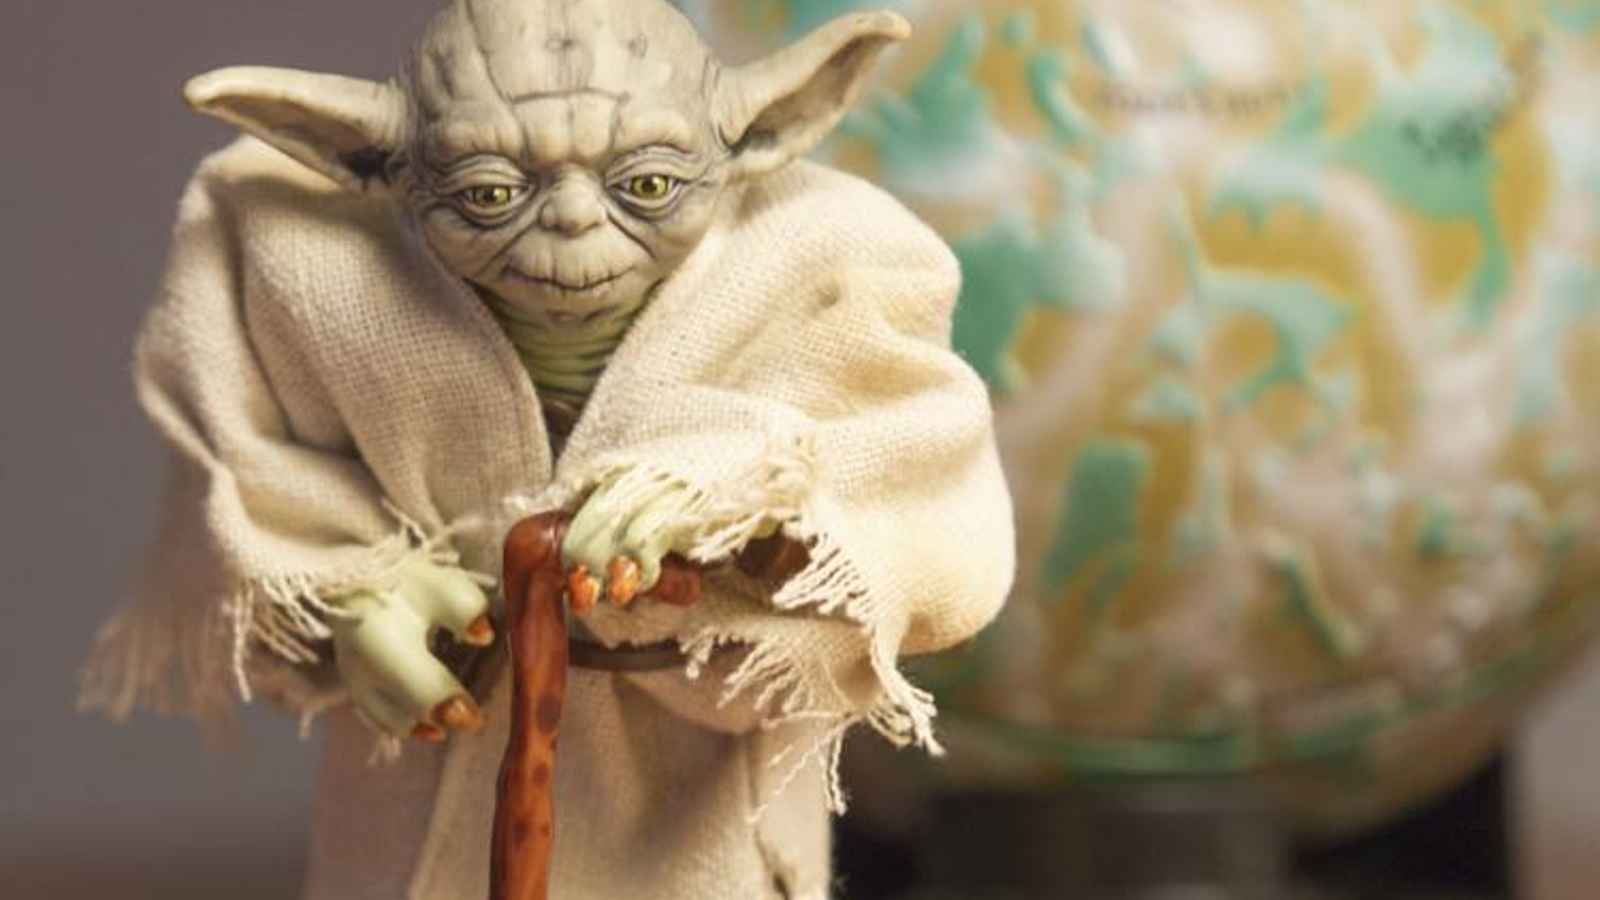 National Talk Like Yoda Day 2023: Date, History, Facts about Yoda